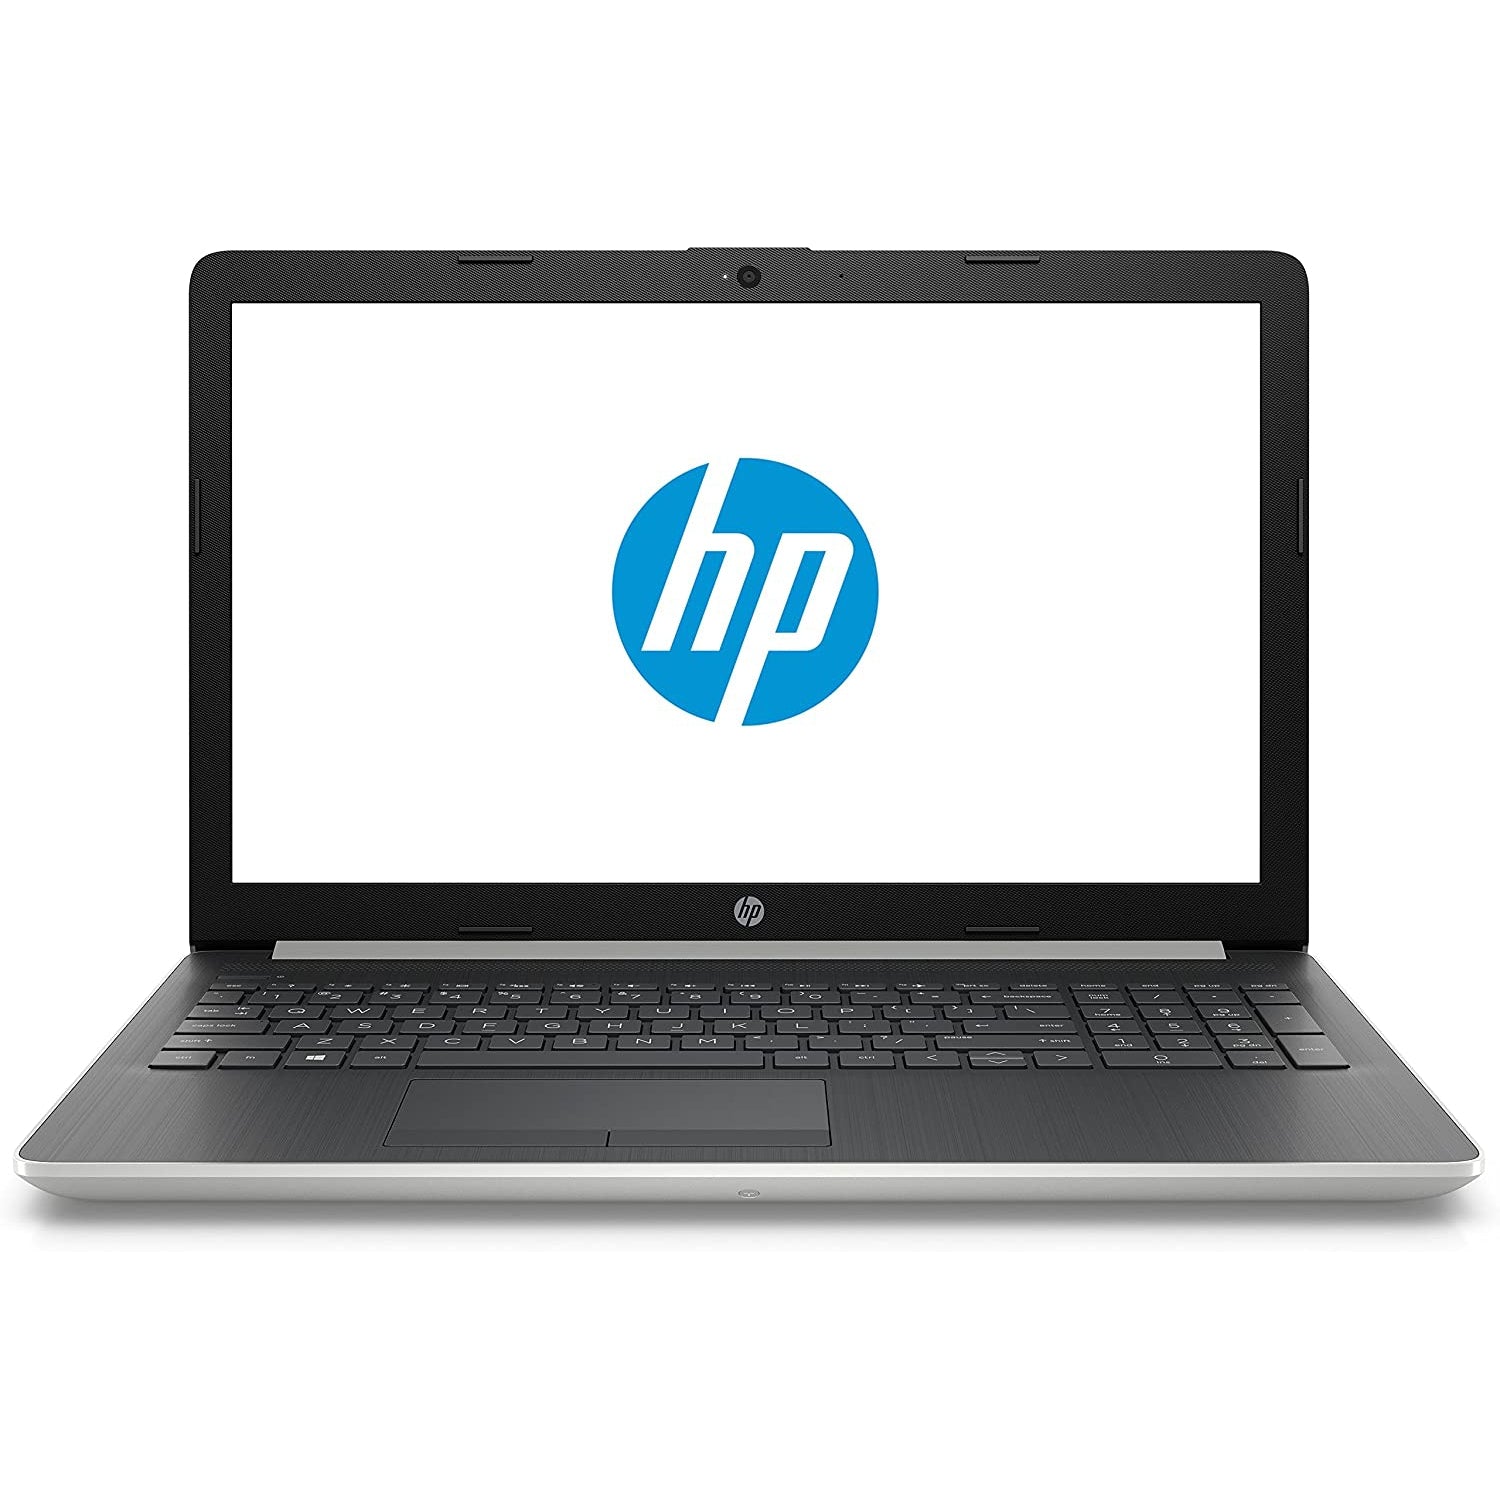 HP Notebook 15-DA0511SA - Intel Core i3, 4GB RAM, 1TB HDD, 15.6" - Silver